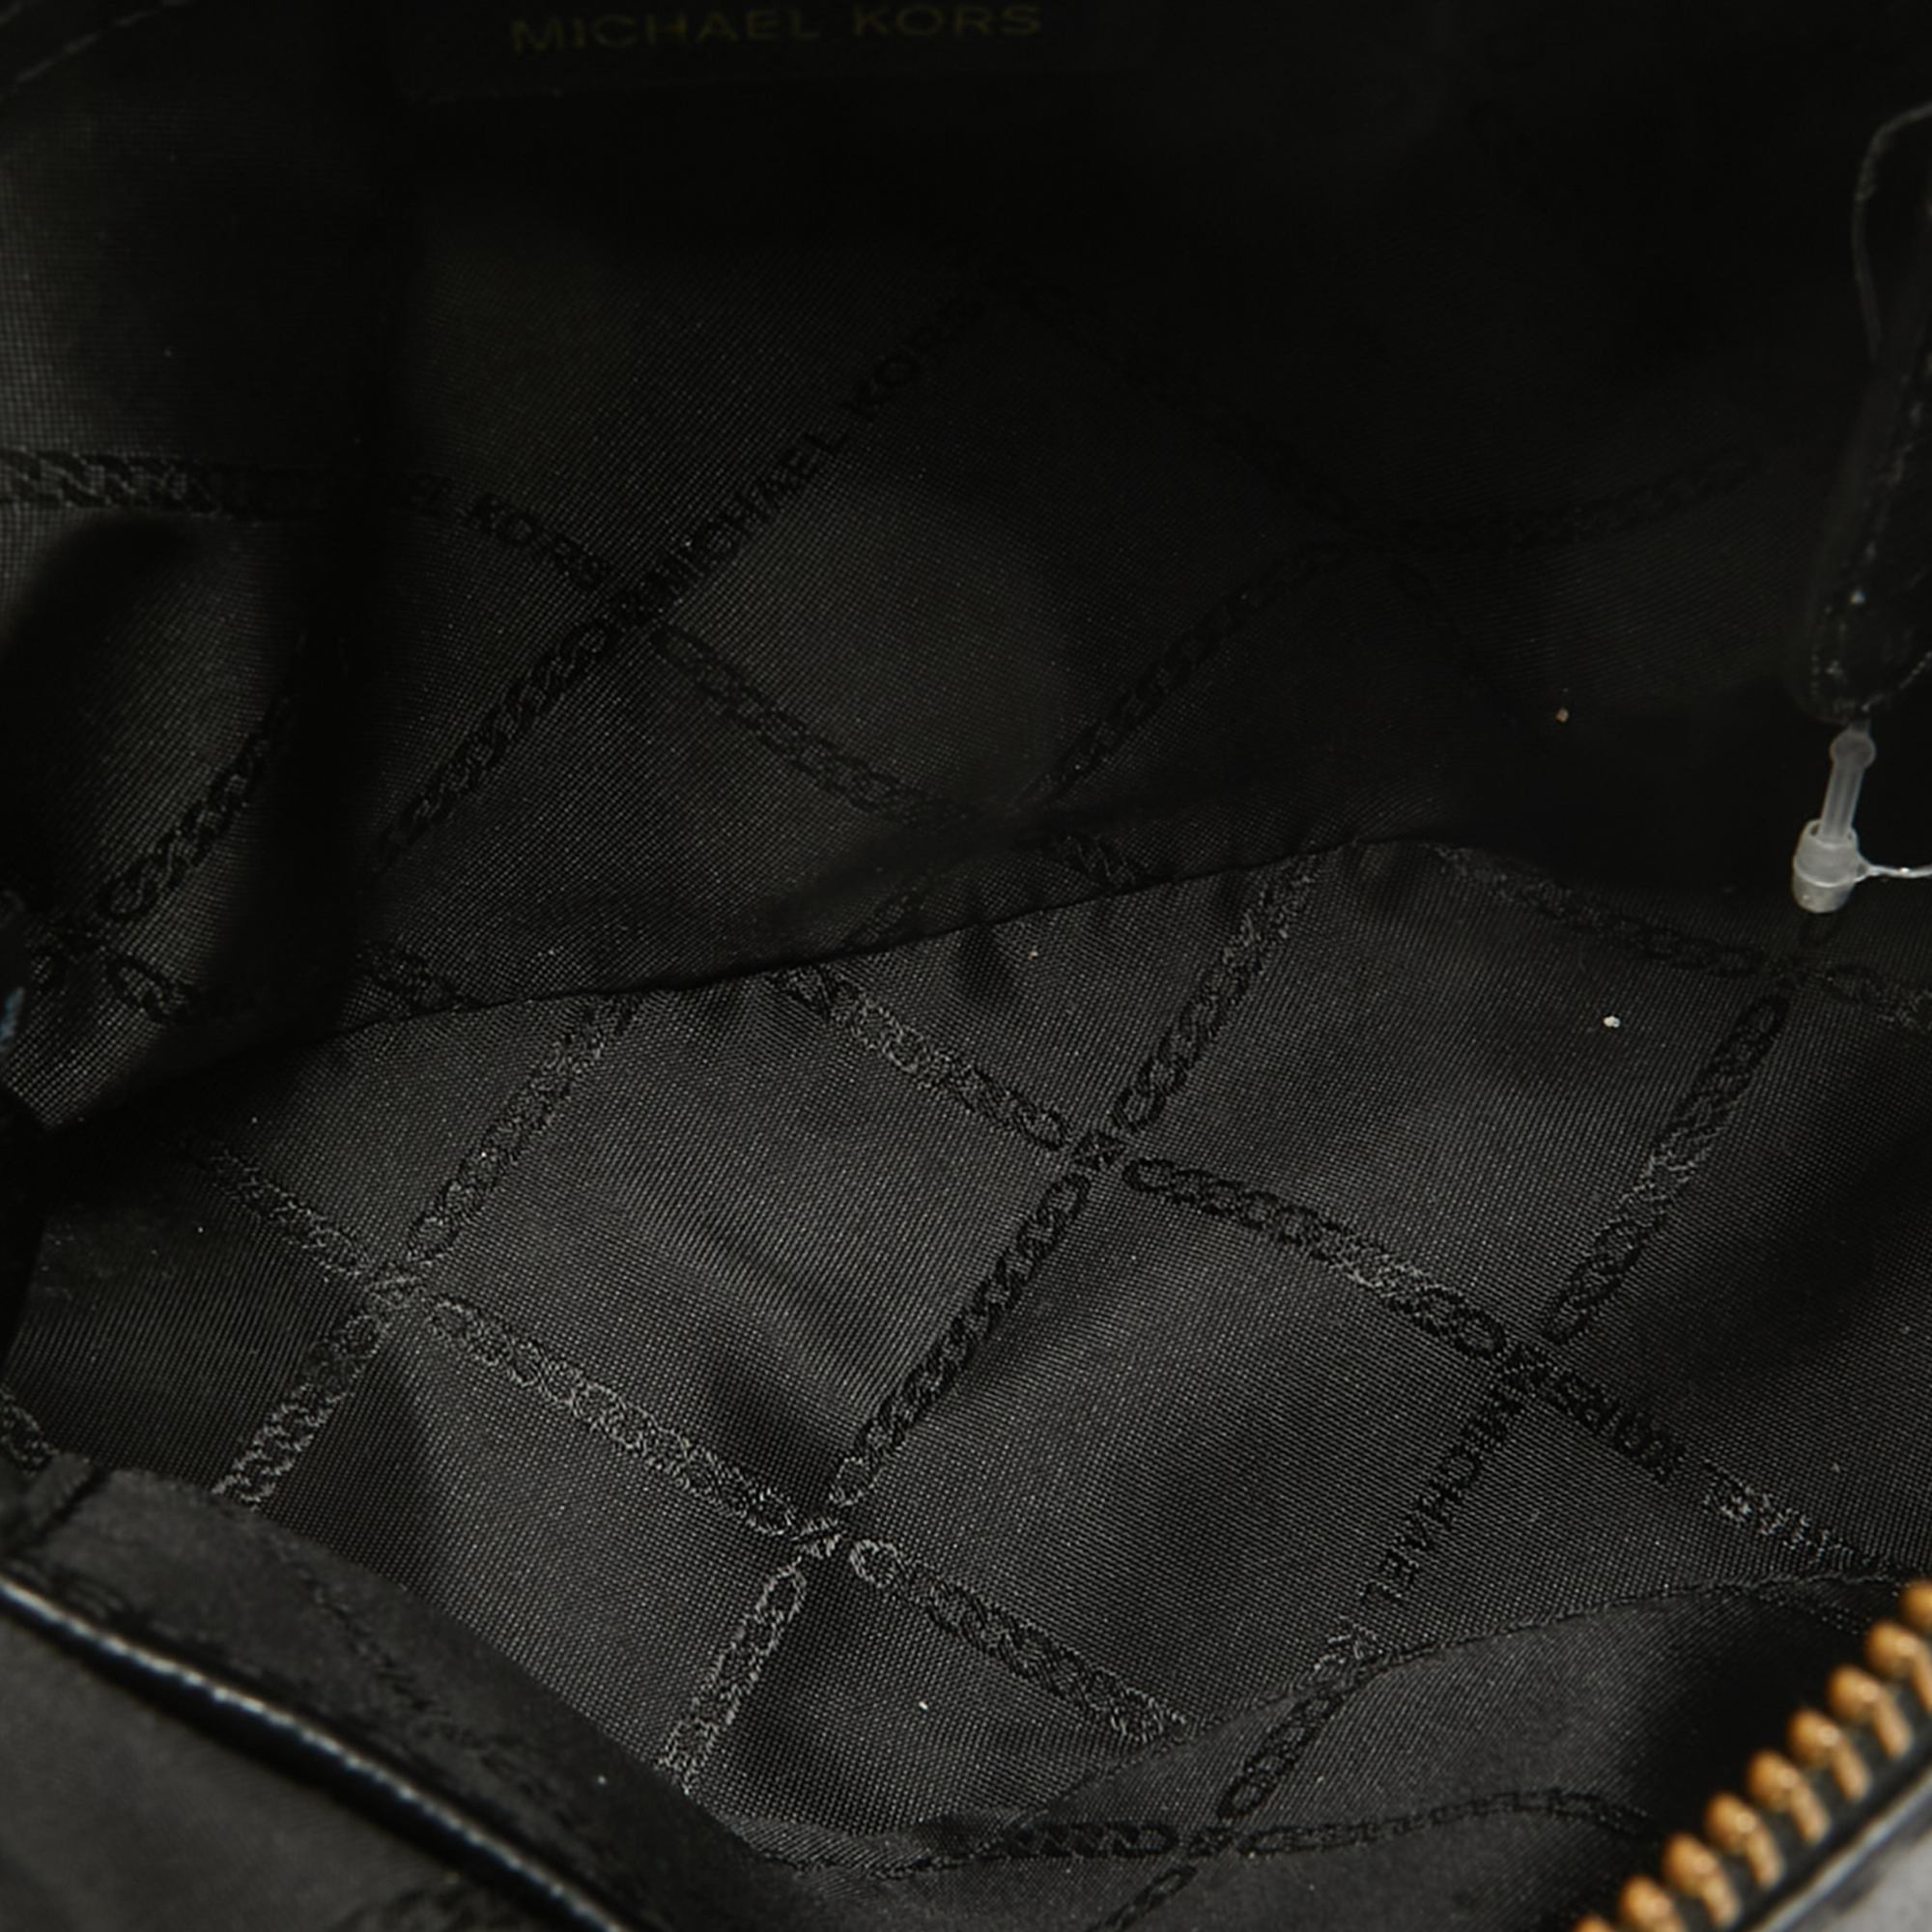 Michael Kors Black Leather Dome Crossbody Bag